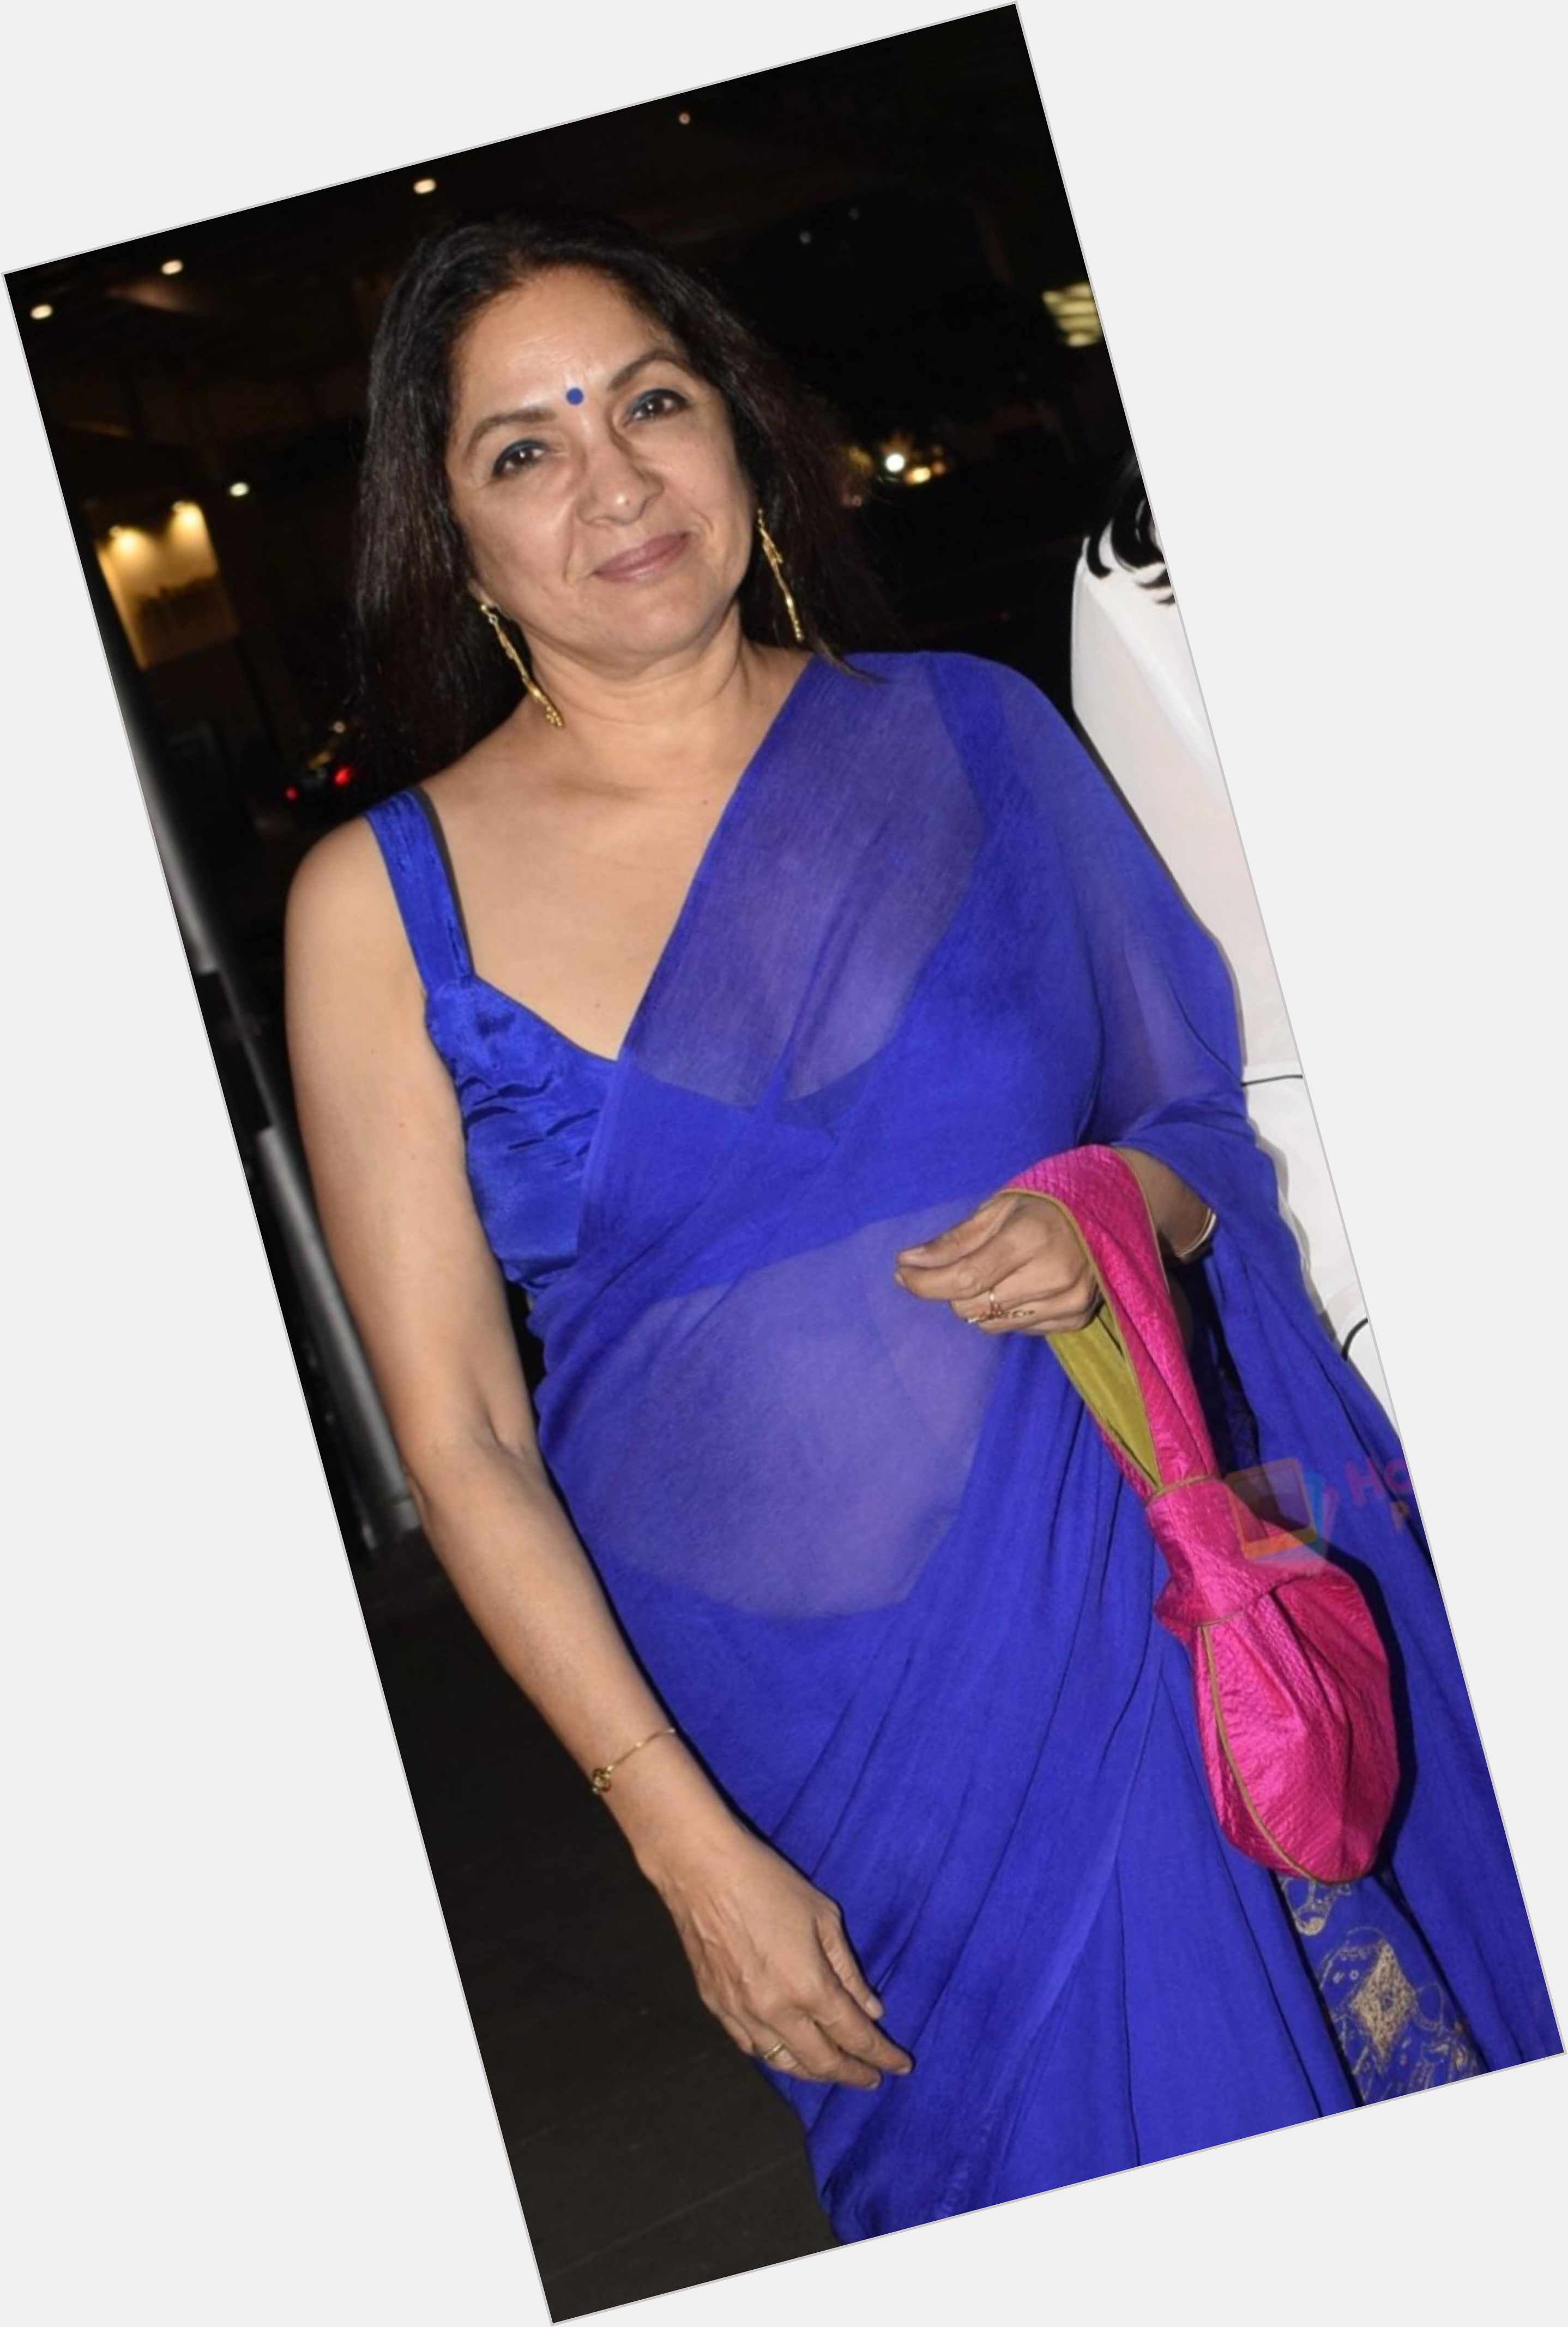 <a href="/hot-women/neena-gupta/where-dating-news-photos">Neena Gupta</a>  